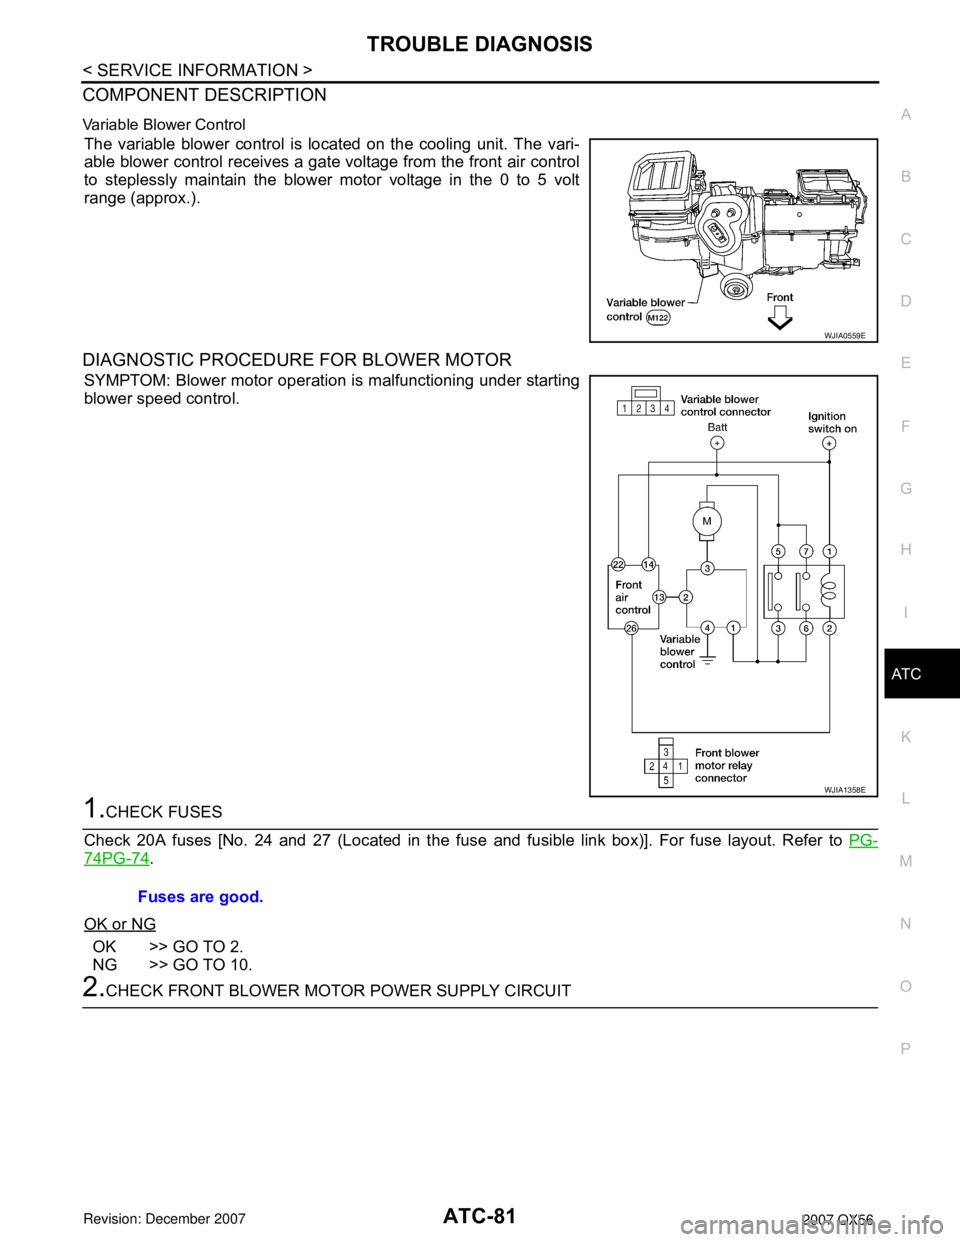 INFINITI QX56 2007  Factory Service Manual 
TROUBLE DIAGNOSISATC-81
< SERVICE INFORMATION >
C
DE
F
G H
I
K L
M A
B
AT C
N
O P
COMPONENT DESCRIPTION
Variable Blower Control
The variable blower control is located on the cooling unit. The vari-
a